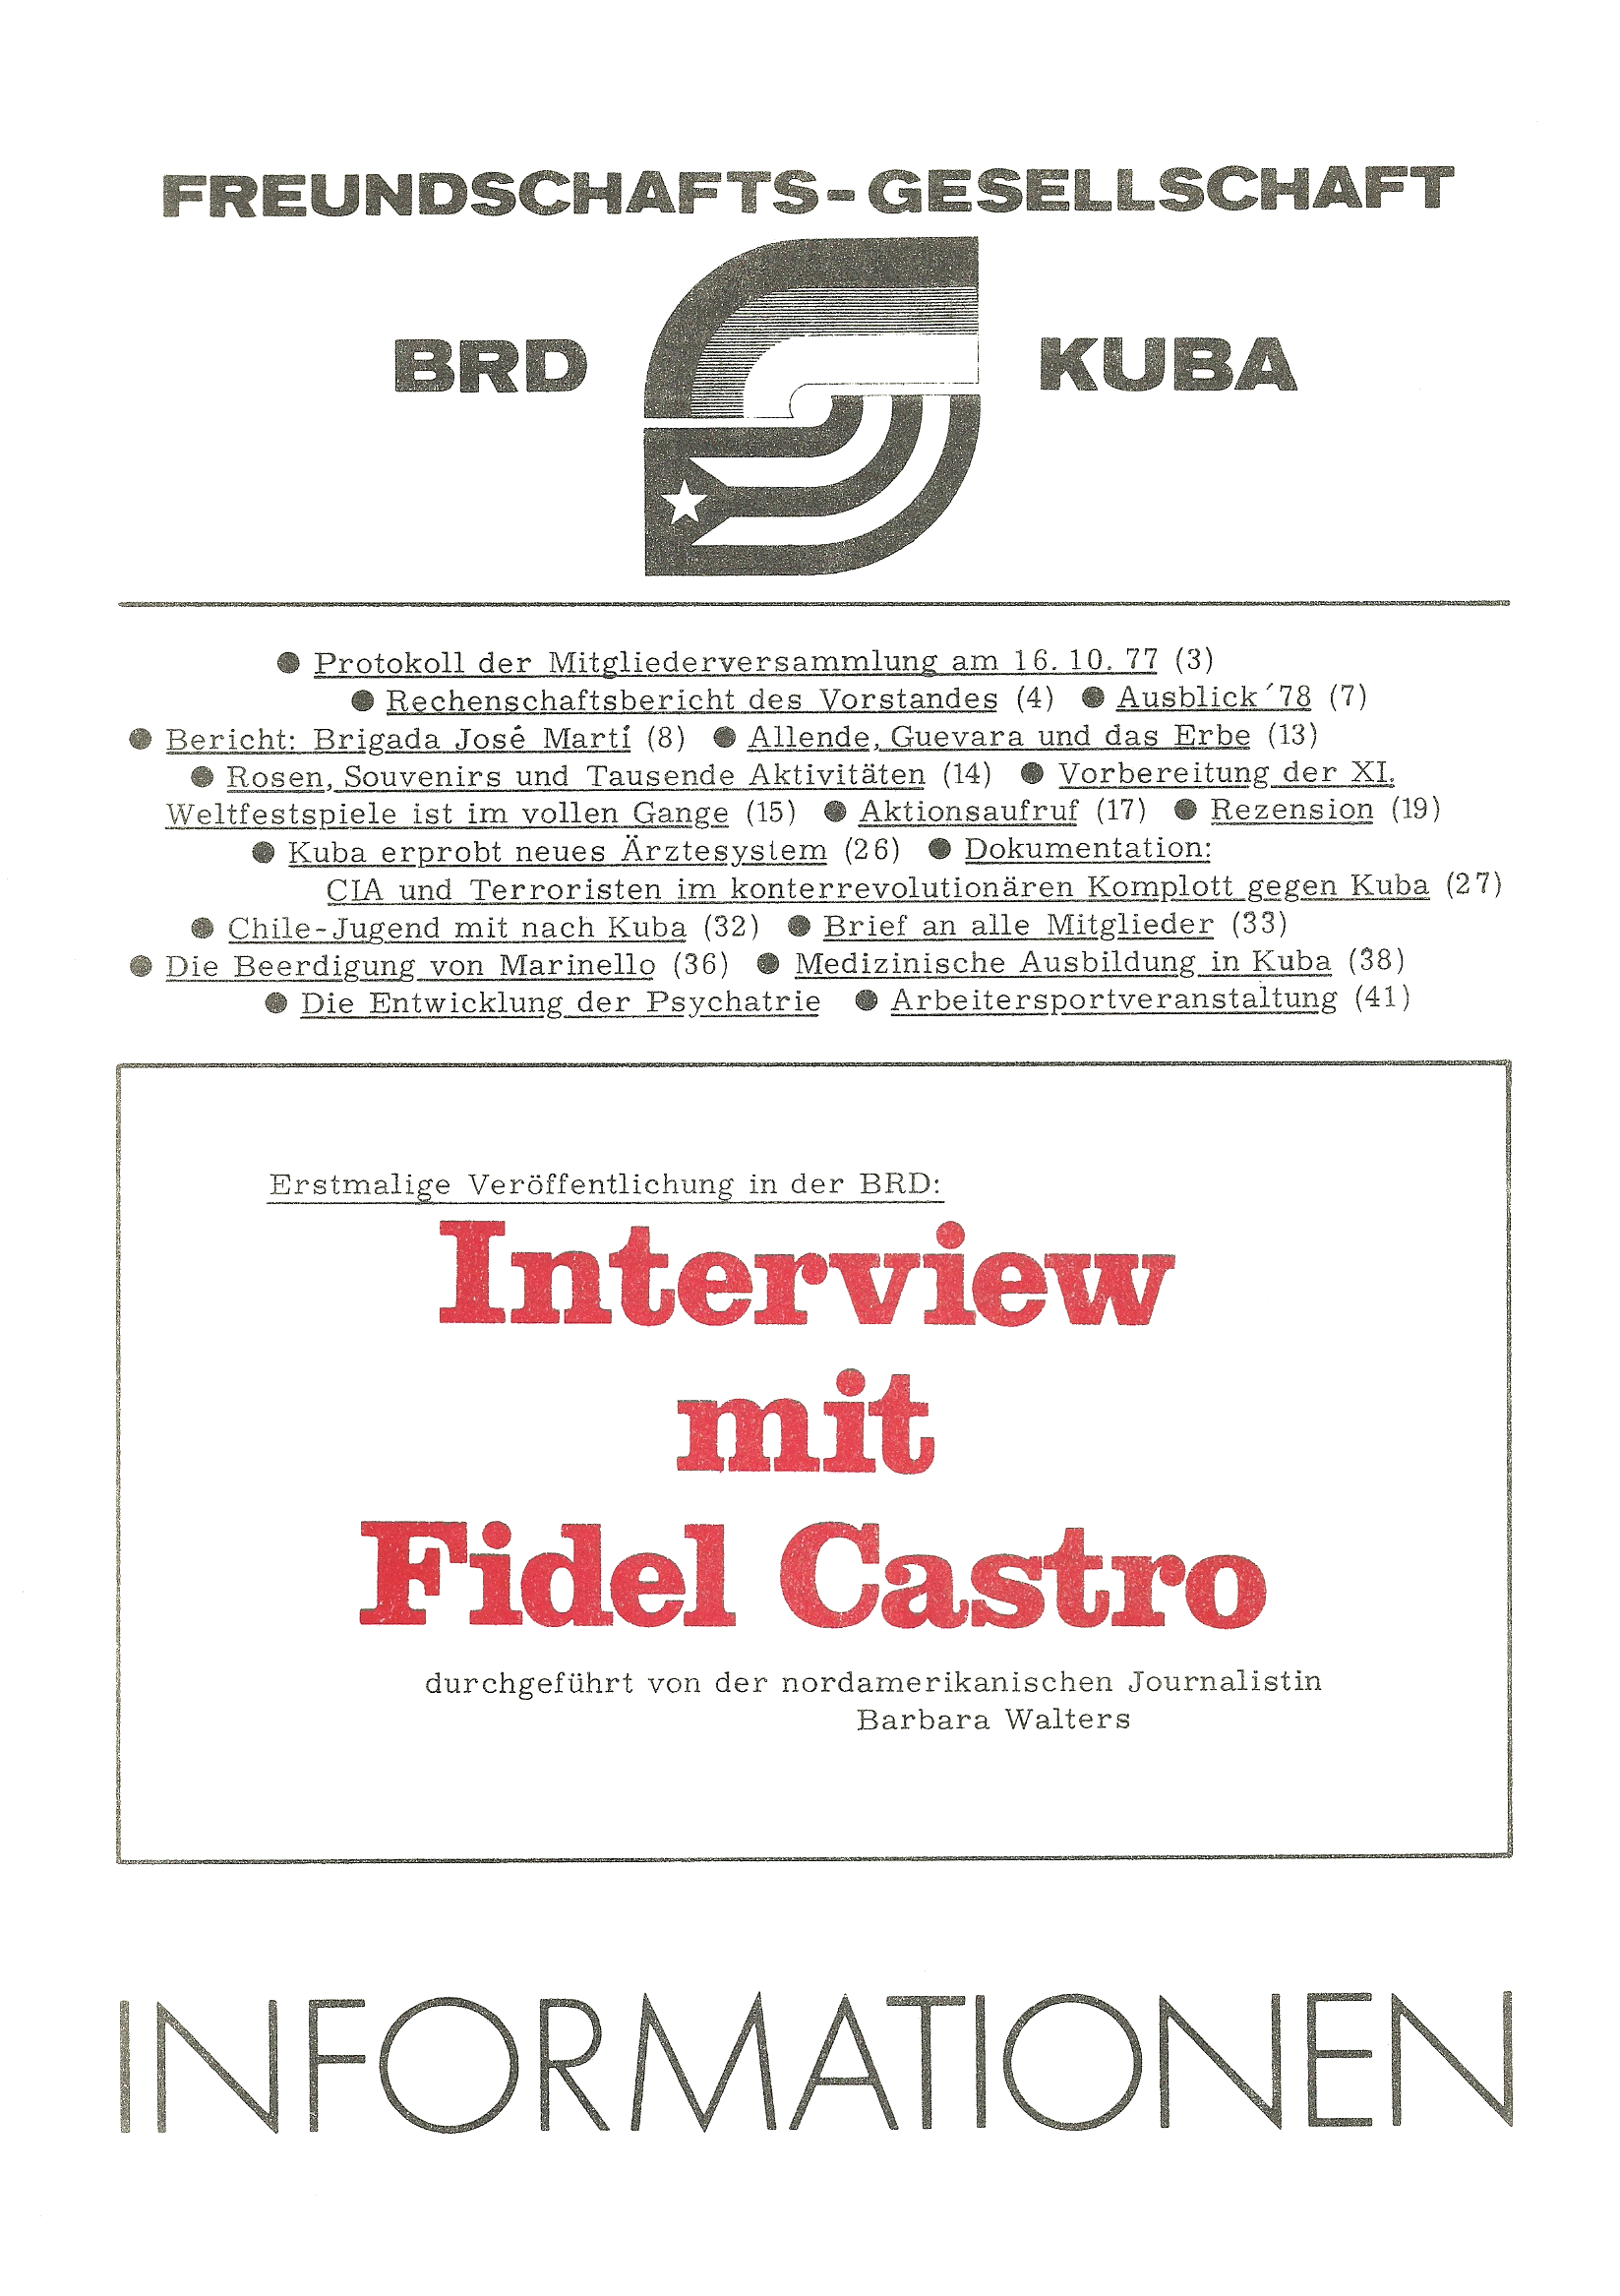 Informationsdienst der Freundschaftsgesellschaft BRD-Kuba 4-1977